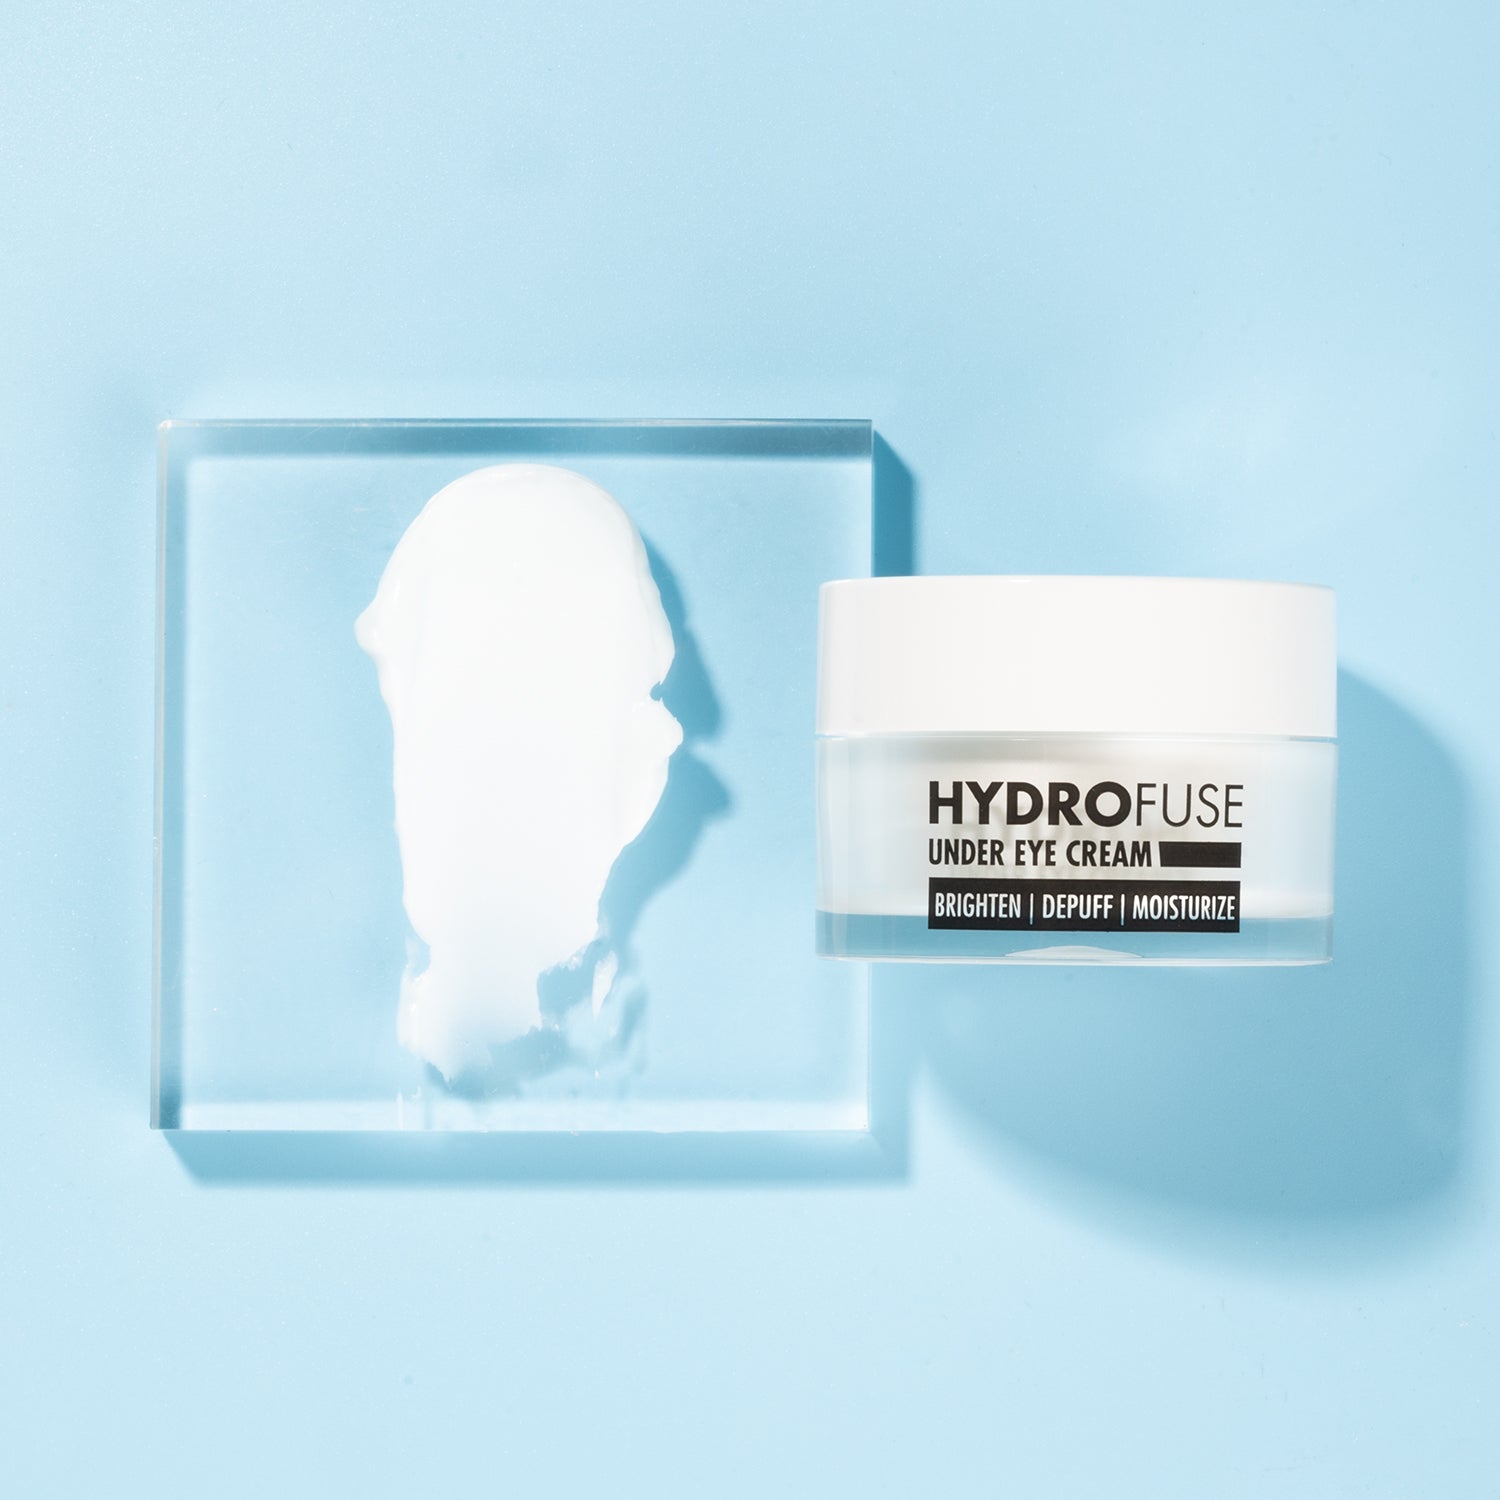 PAC Cosmetics Hydro Fuse Eye Cream (15 ml)